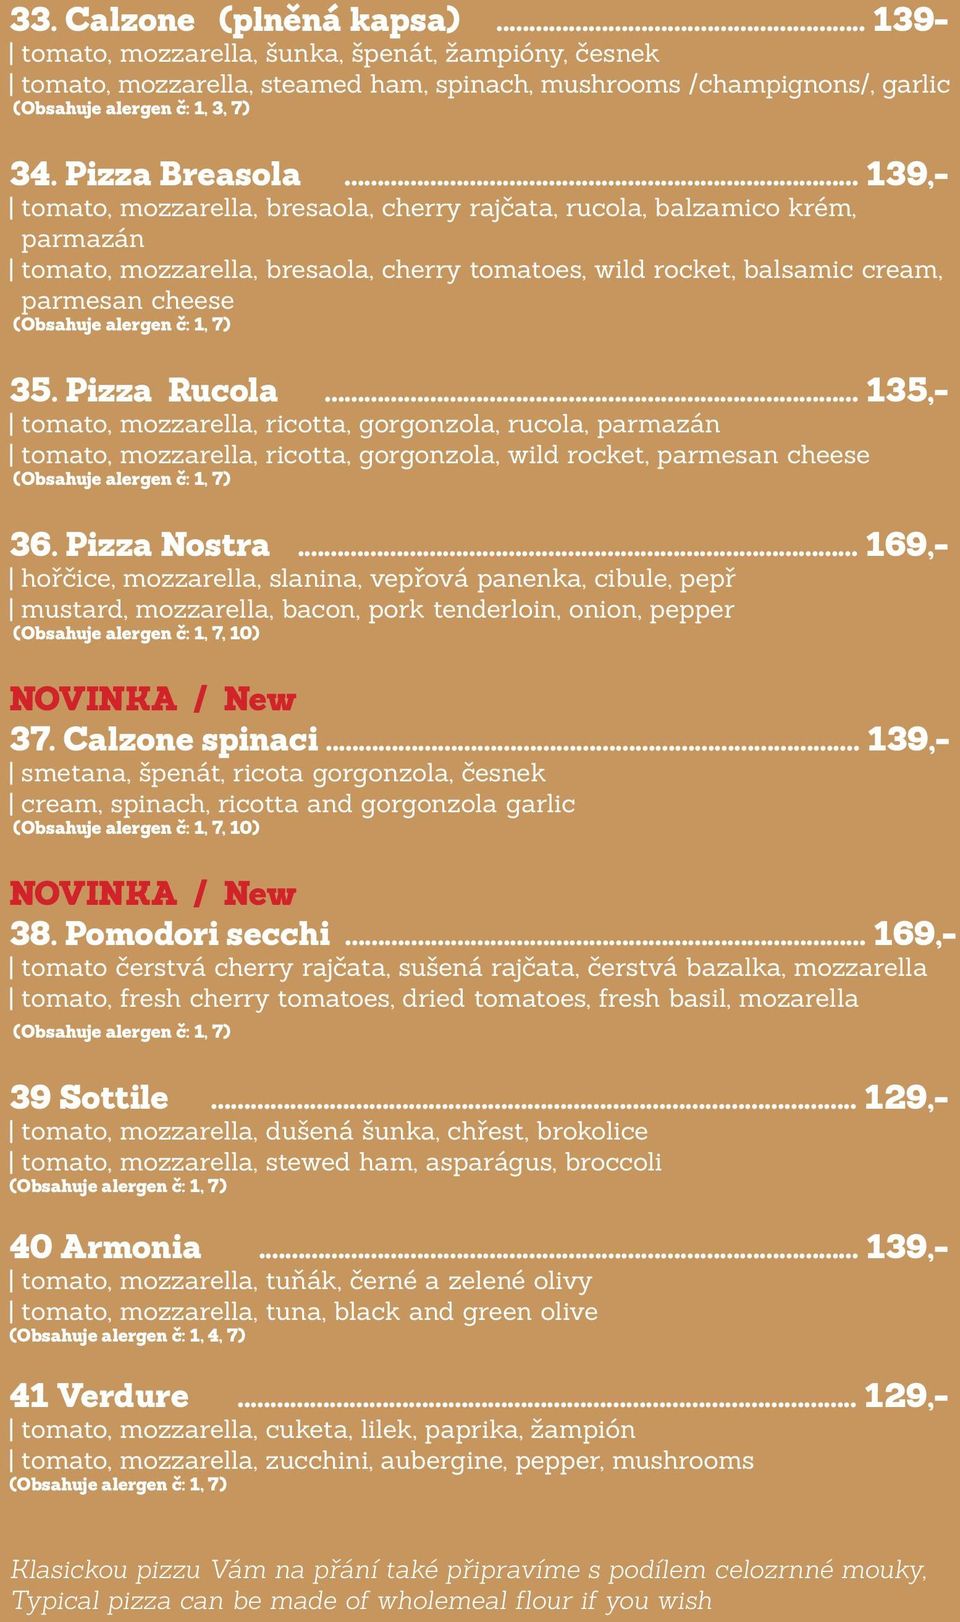 .. 135,- tomato, mozzarella, ricotta, gorgonzola, rucola, parmazán tomato, mozzarella, ricotta, gorgonzola, wild rocket, parmesan cheese 36. Pizza Nostra.